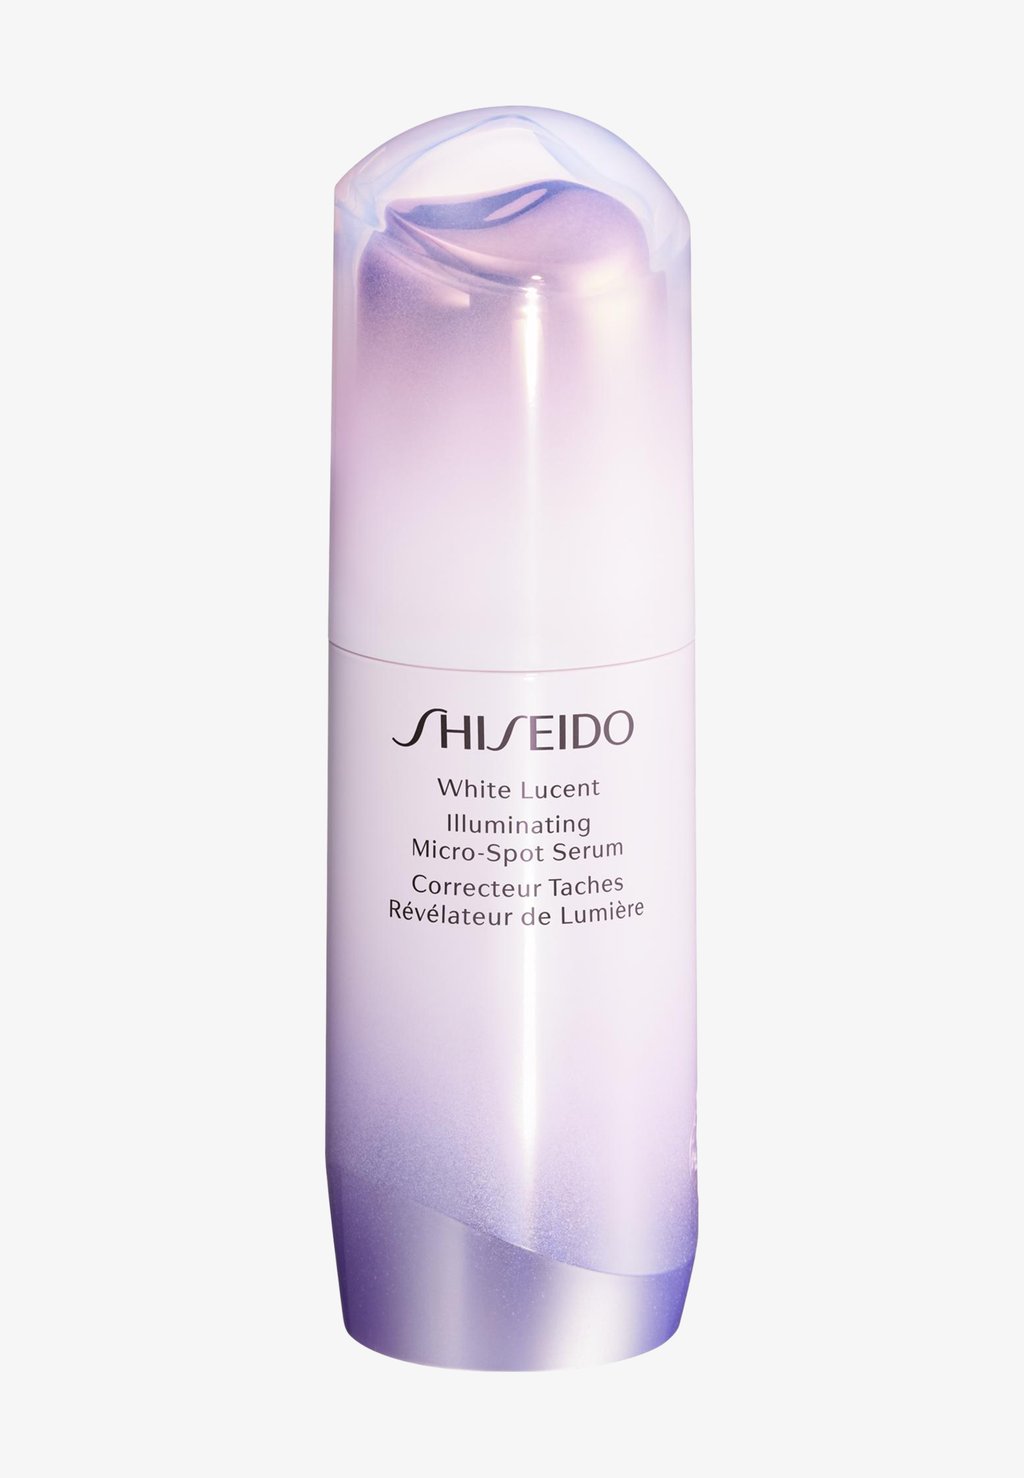 Сыворотка White Lucent Illuminating Micro-Spot Serum 50Ml Shiseido осветляющая сыворотка против пигментных пятен white lucent illuminating micro spot serum